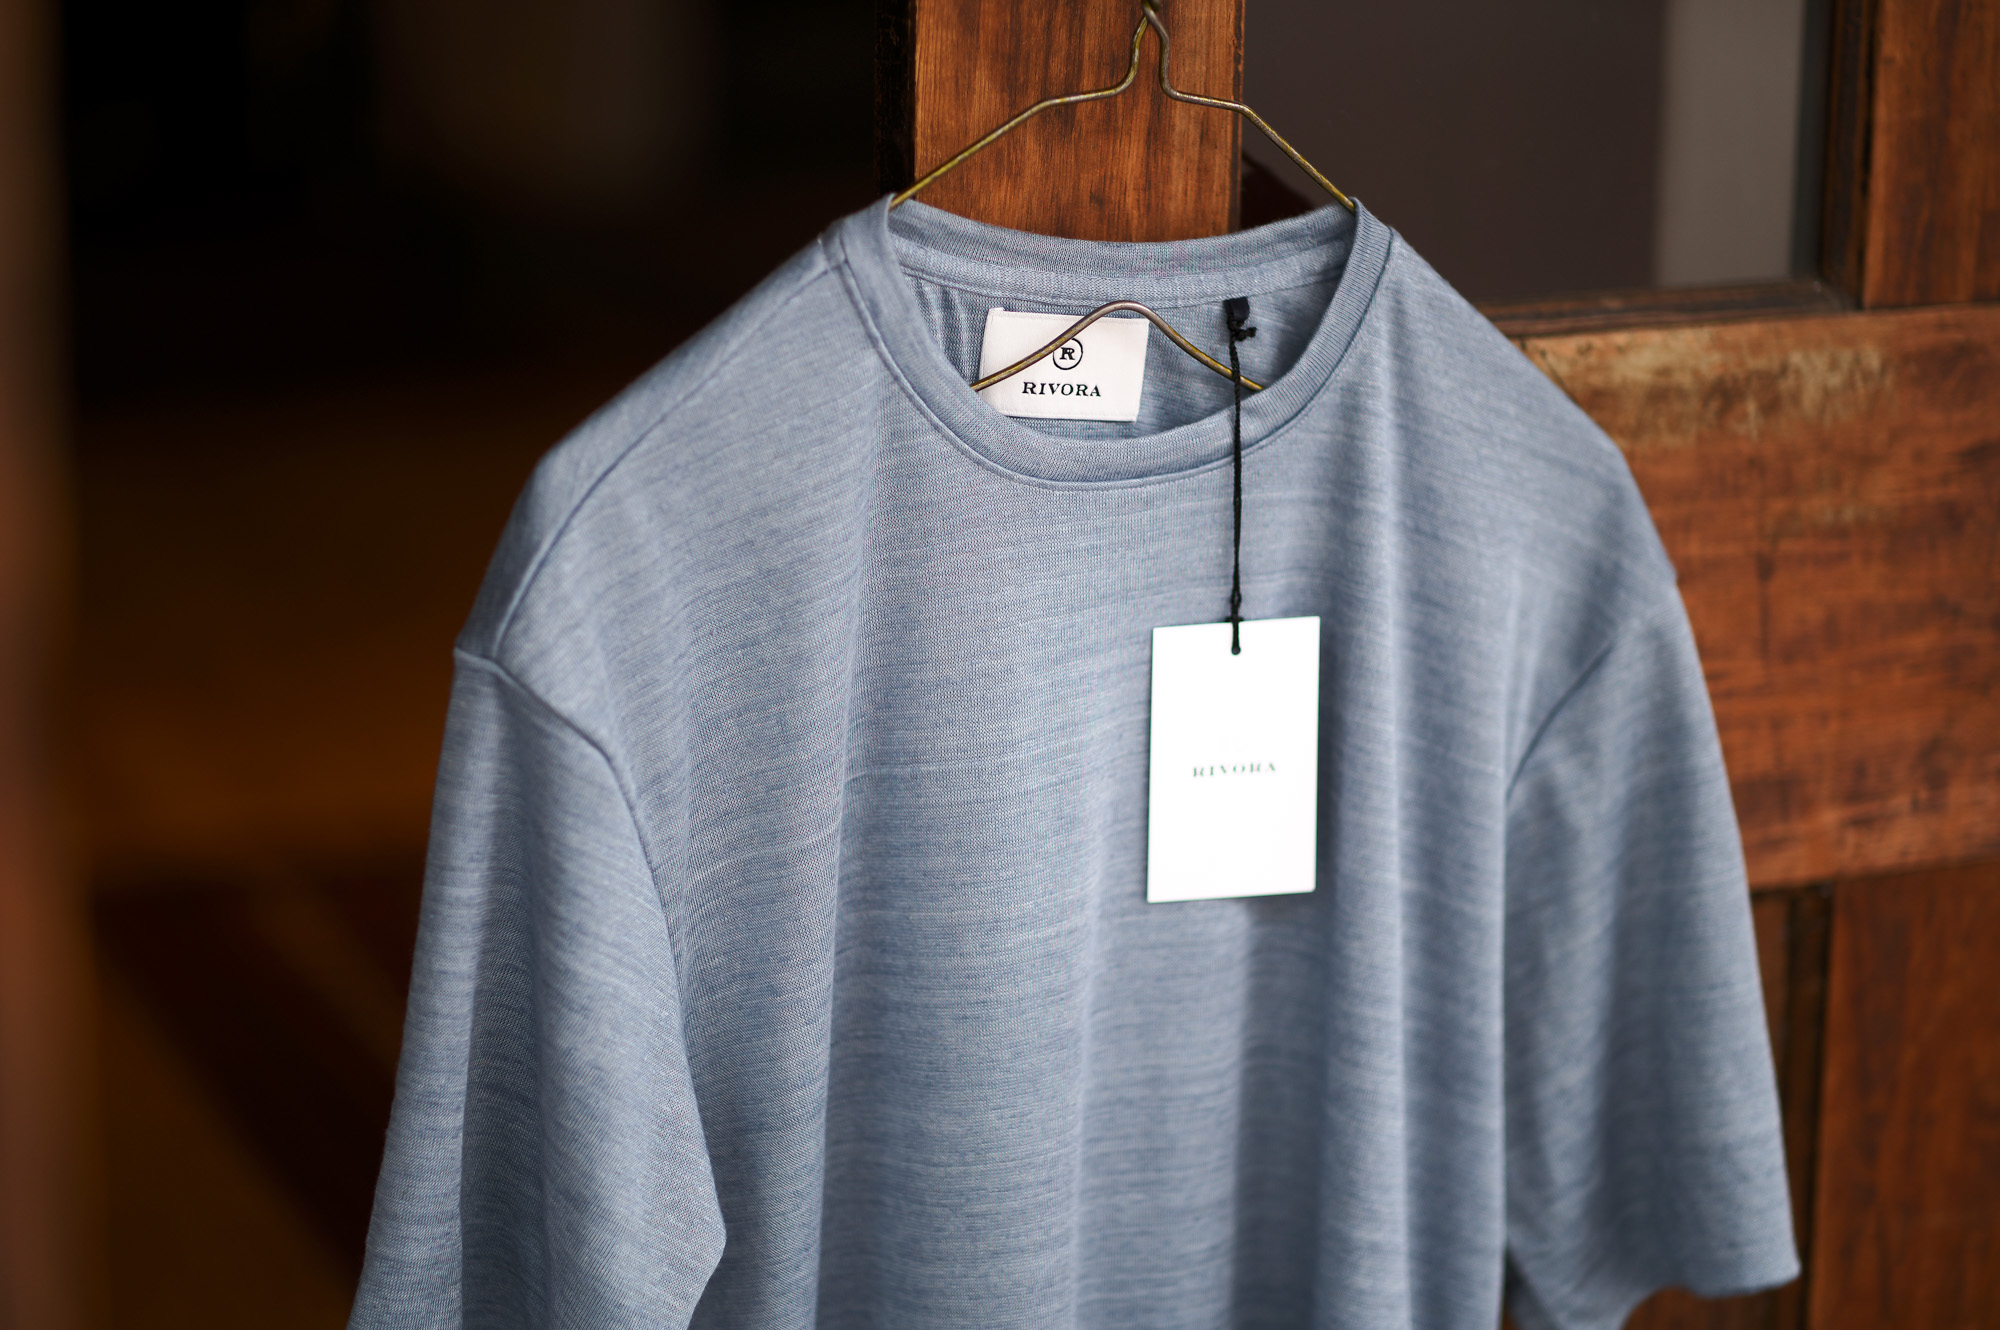 RIVORA (リヴォラ) Vintage Linen Layered T-Shirts ヴィンテージ リネン レイヤード Tシャツ L BLUE (ライトブルー・050) MADE IN JAPAN (日本製) 2023 春夏新作  【入荷しました】【フリー分発売開始】愛知 名古屋 Alto e Diritto altoediritto アルトエデリット